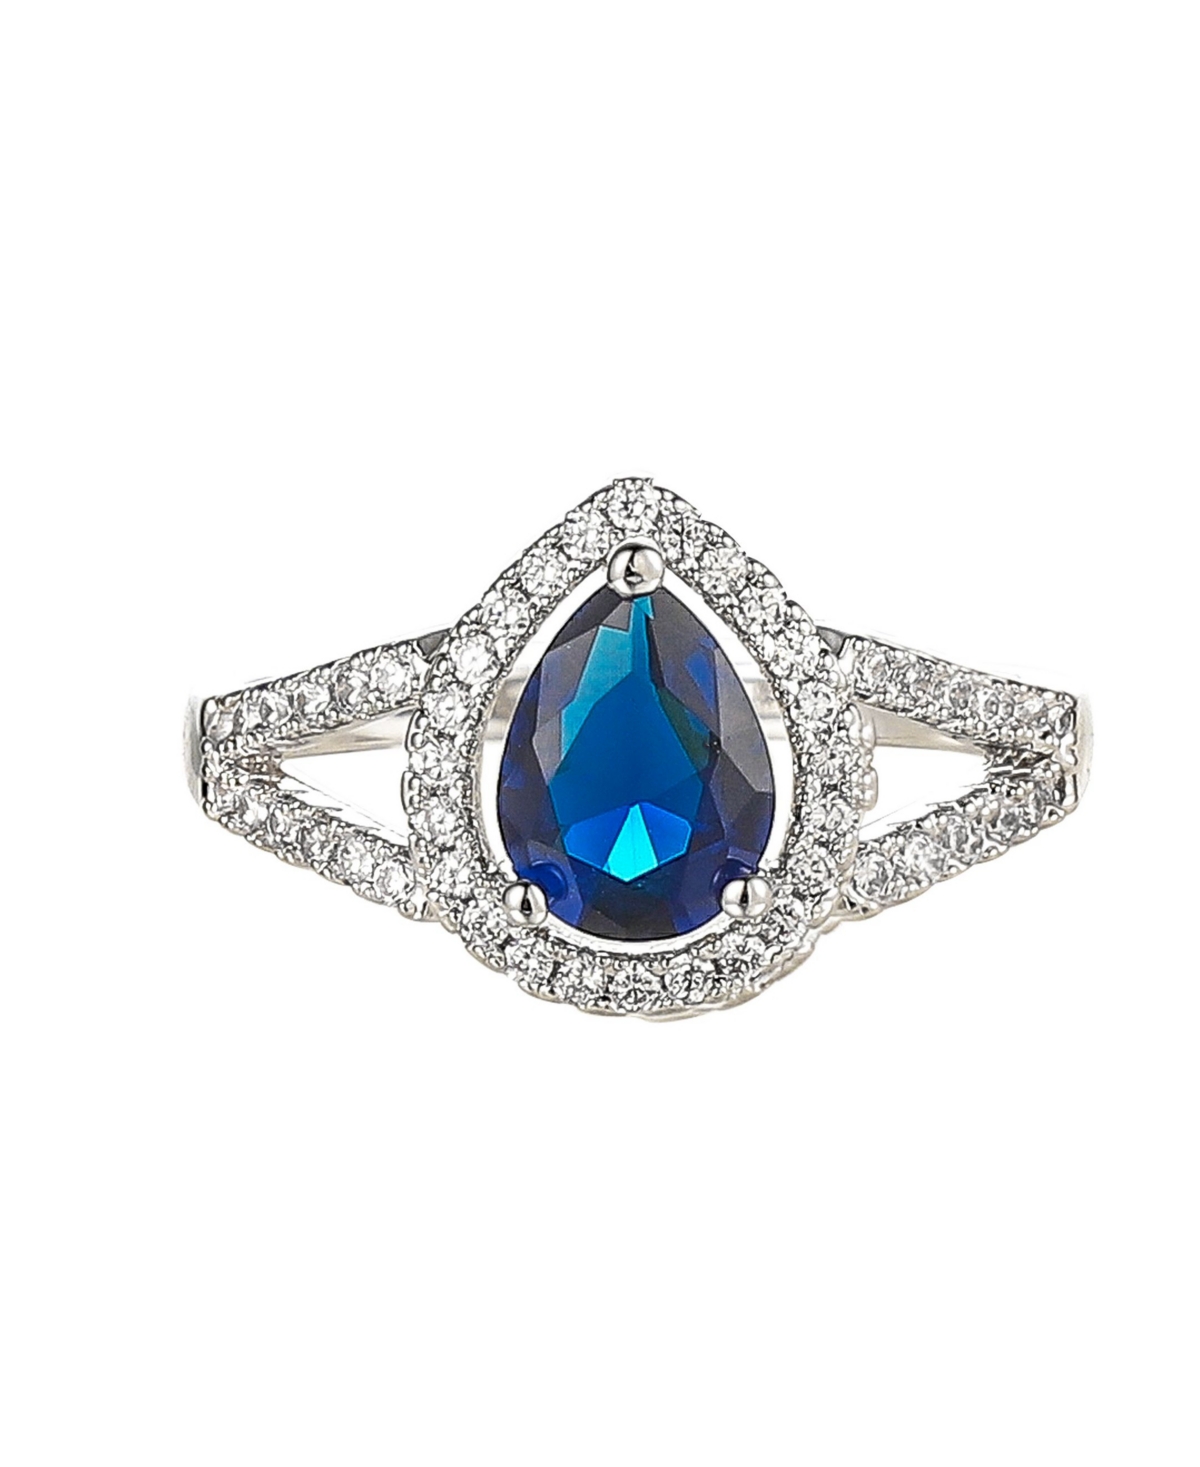 A & M Silver-Tone Sapphire Pear Shaped Ring